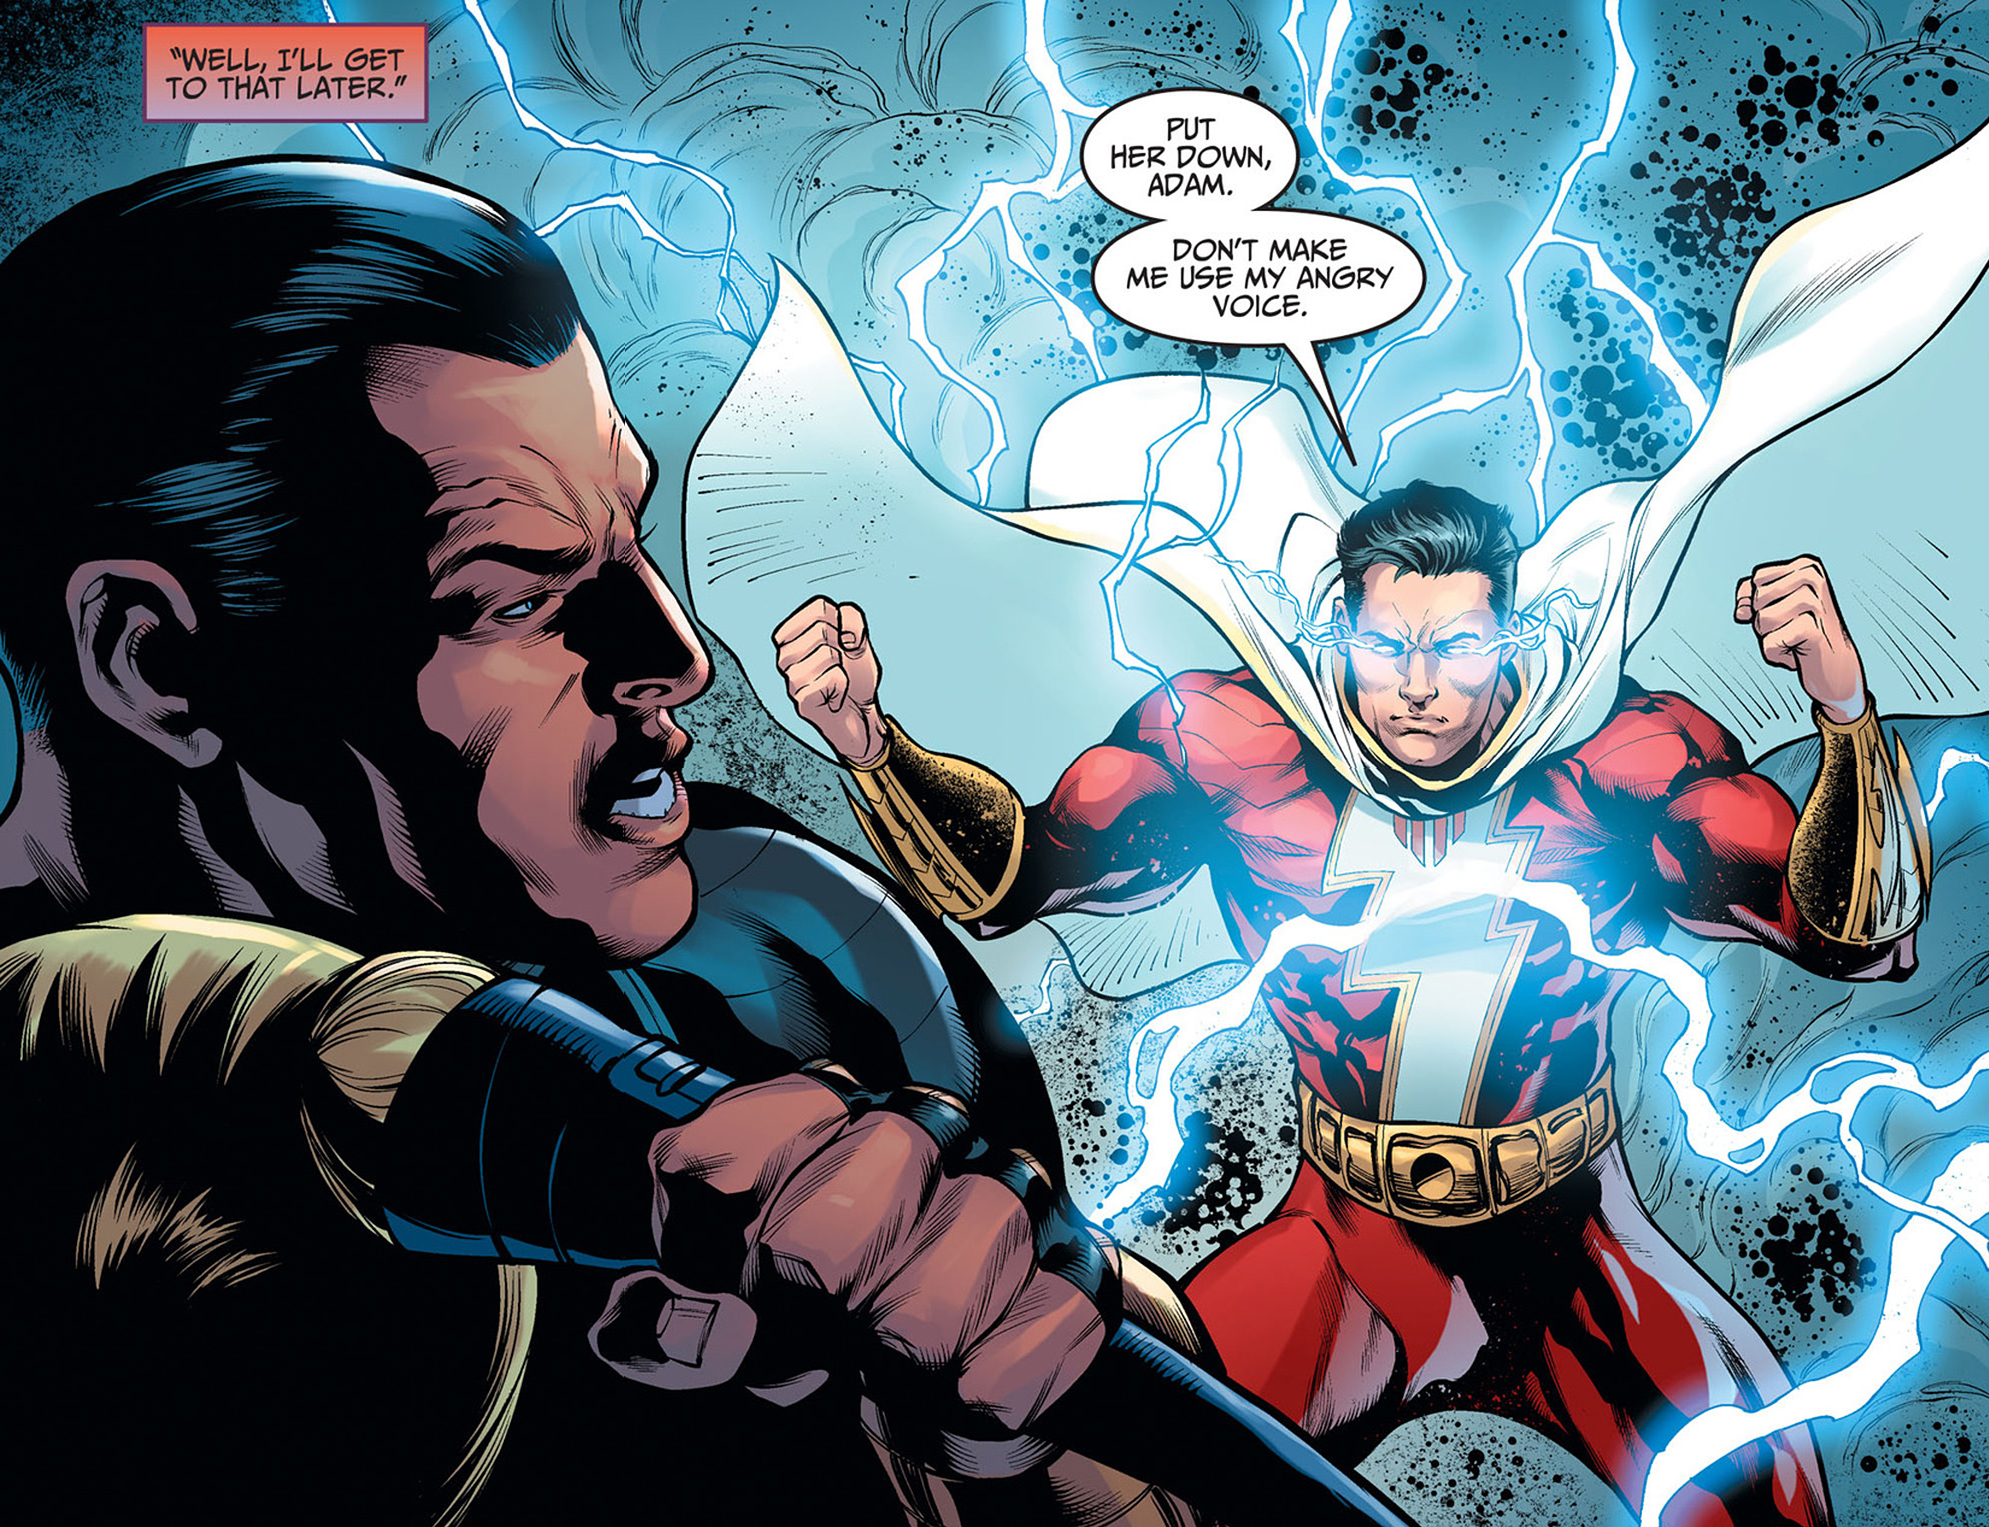 Black Adam vs Shazam in the comics